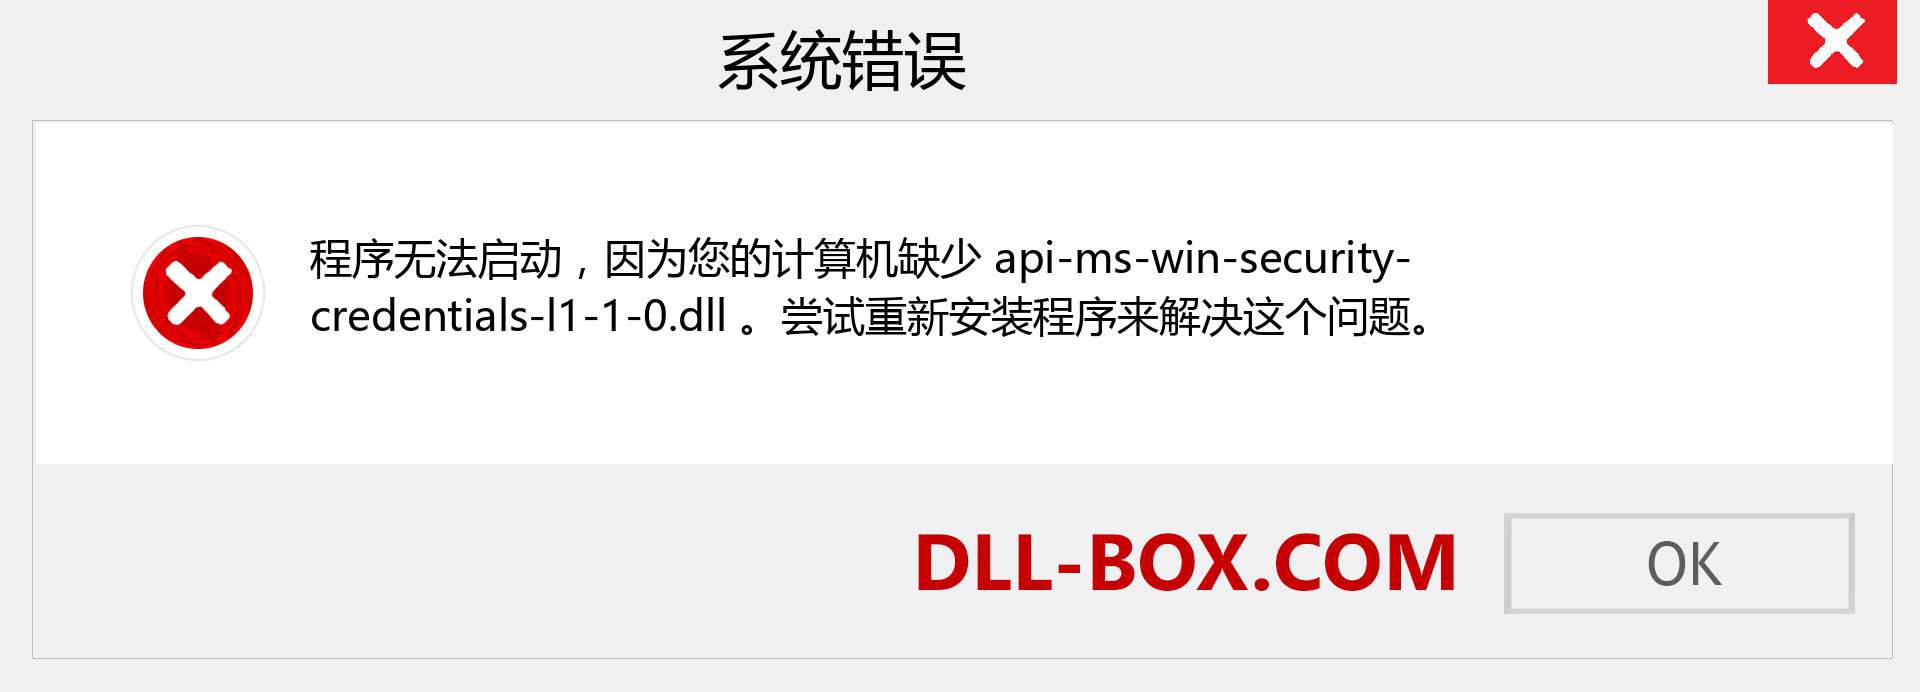 api-ms-win-security-credentials-l1-1-0.dll 文件丢失？。 适用于 Windows 7、8、10 的下载 - 修复 Windows、照片、图像上的 api-ms-win-security-credentials-l1-1-0 dll 丢失错误